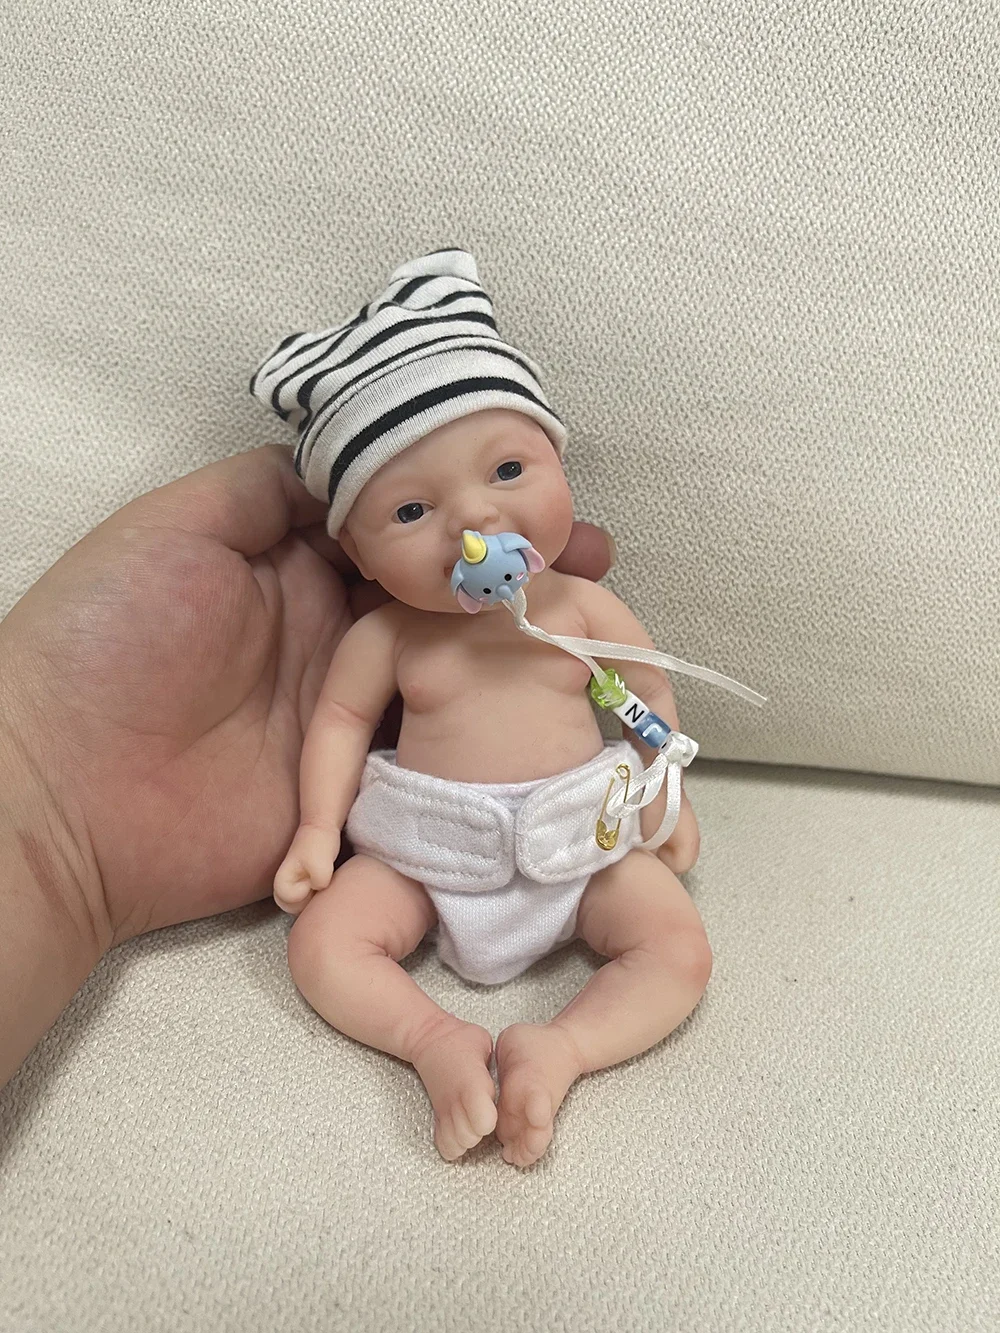 

7" Micro Preemie Full Body Silicone Smile Baby Doll Boy "Noah" Lifelike Mini Reborn Doll Surprice Children Anti-Stress